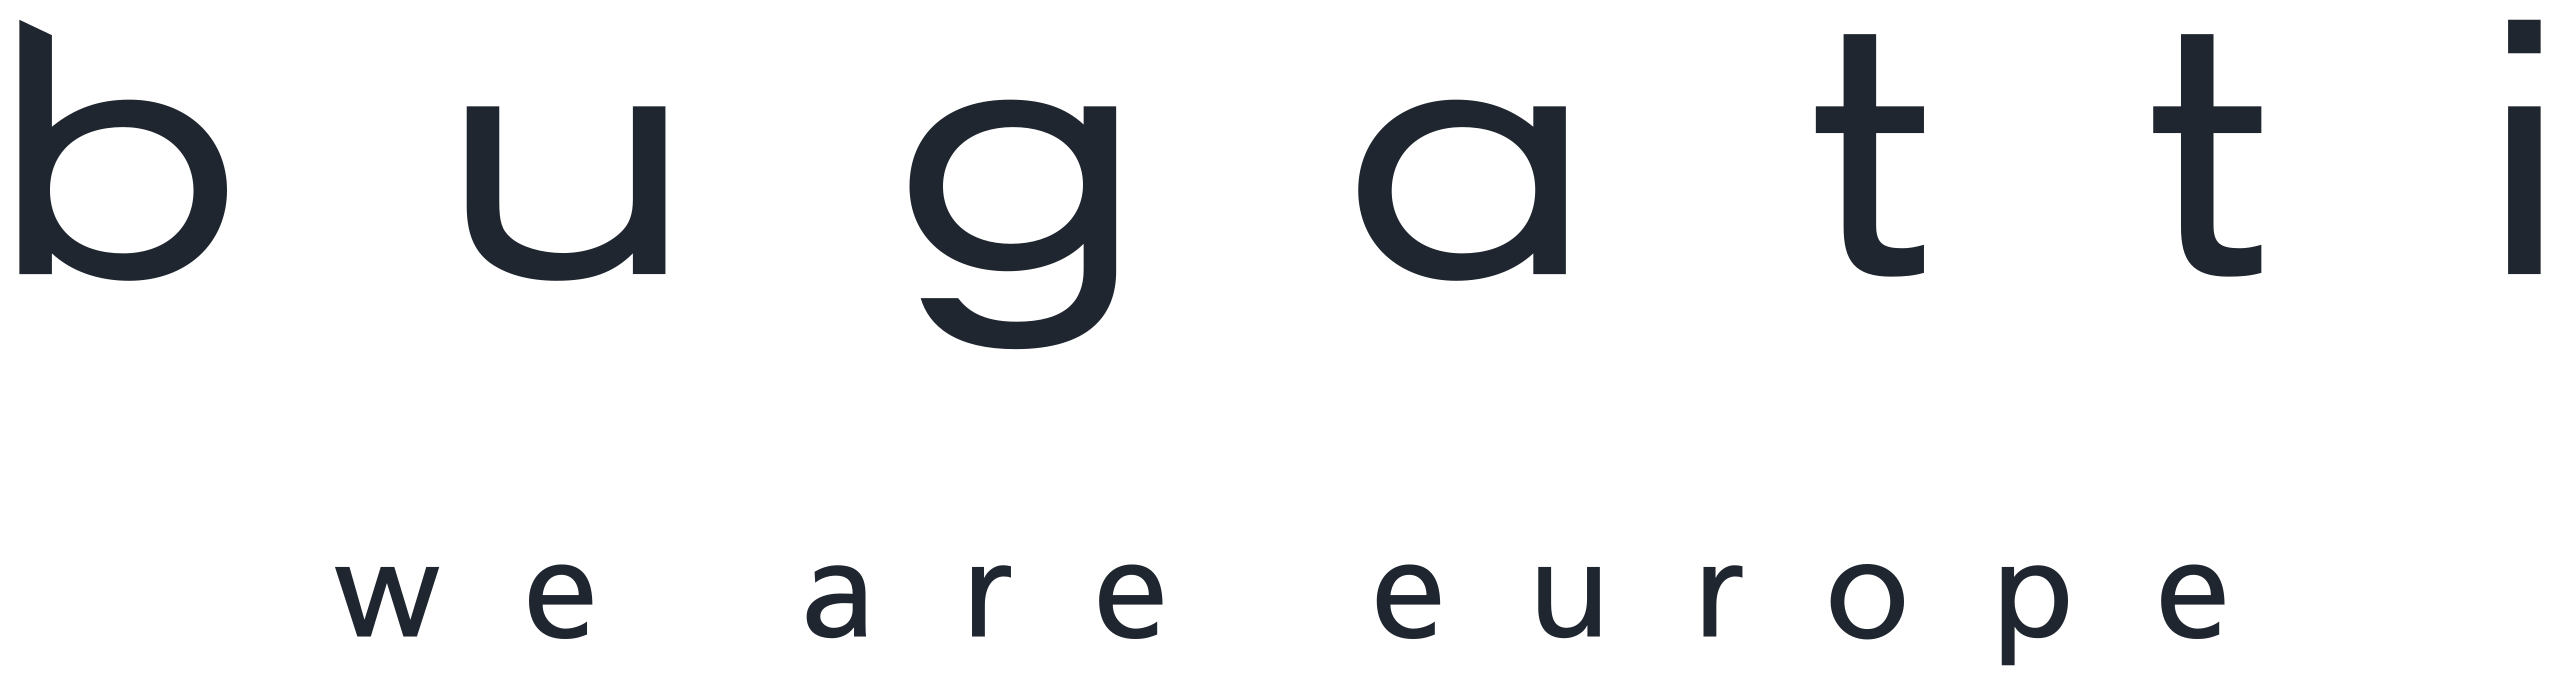 logo.svg - Wikimedia Commons